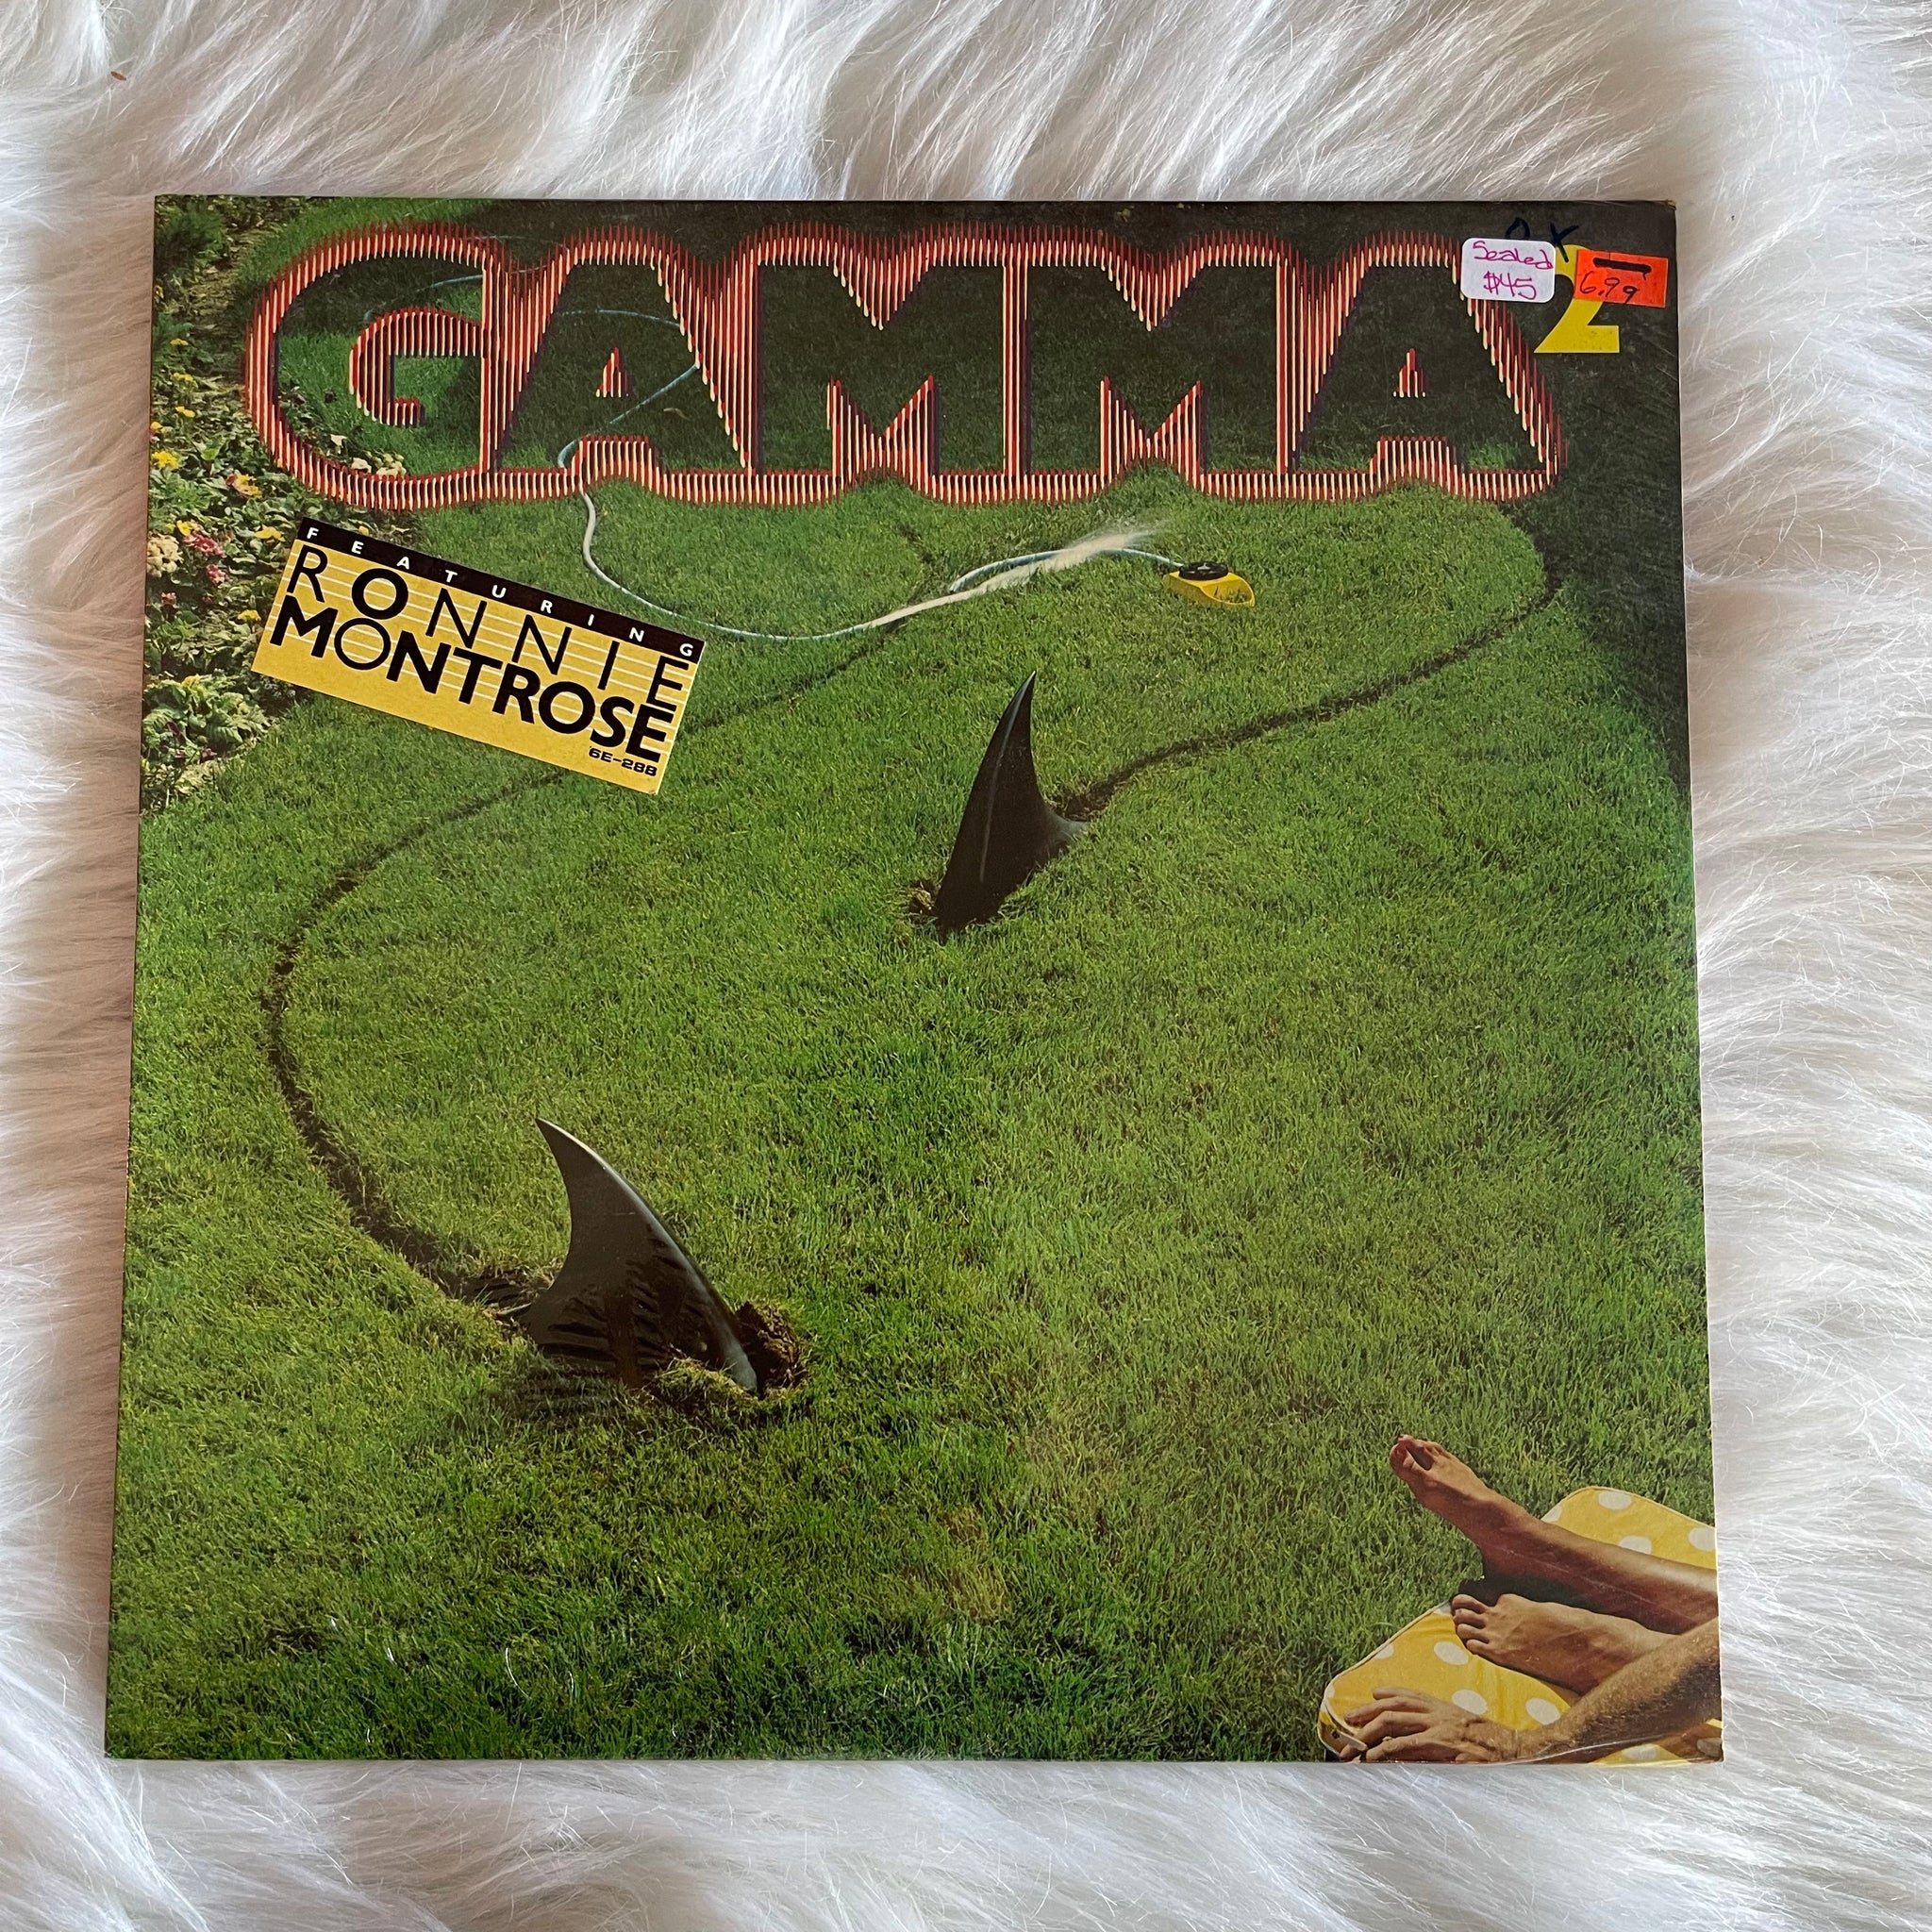 Gamma-Gamma 2 / Featuring Ronnie Montrose